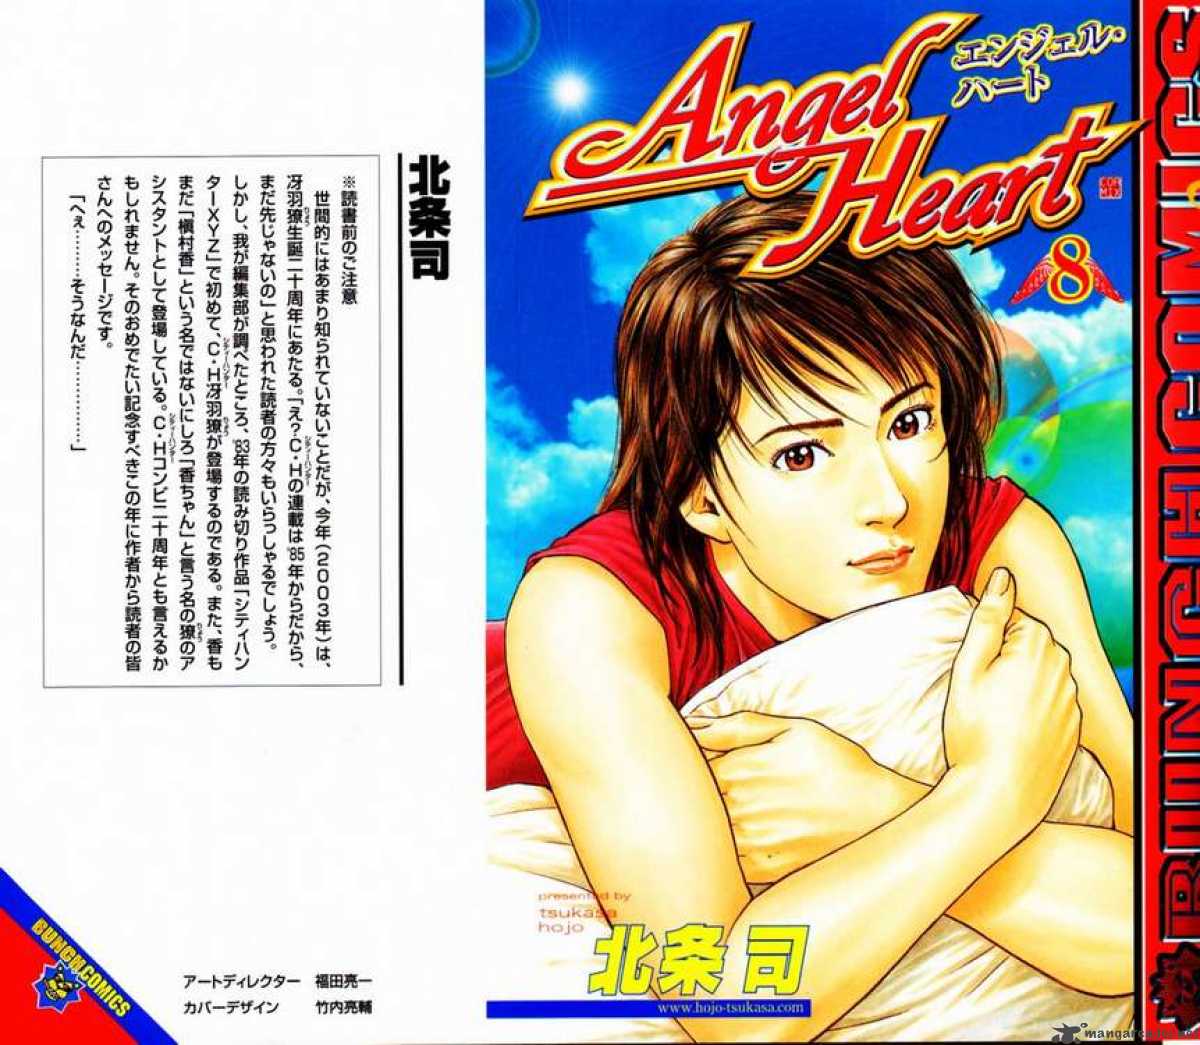 Angel Heart 78 20